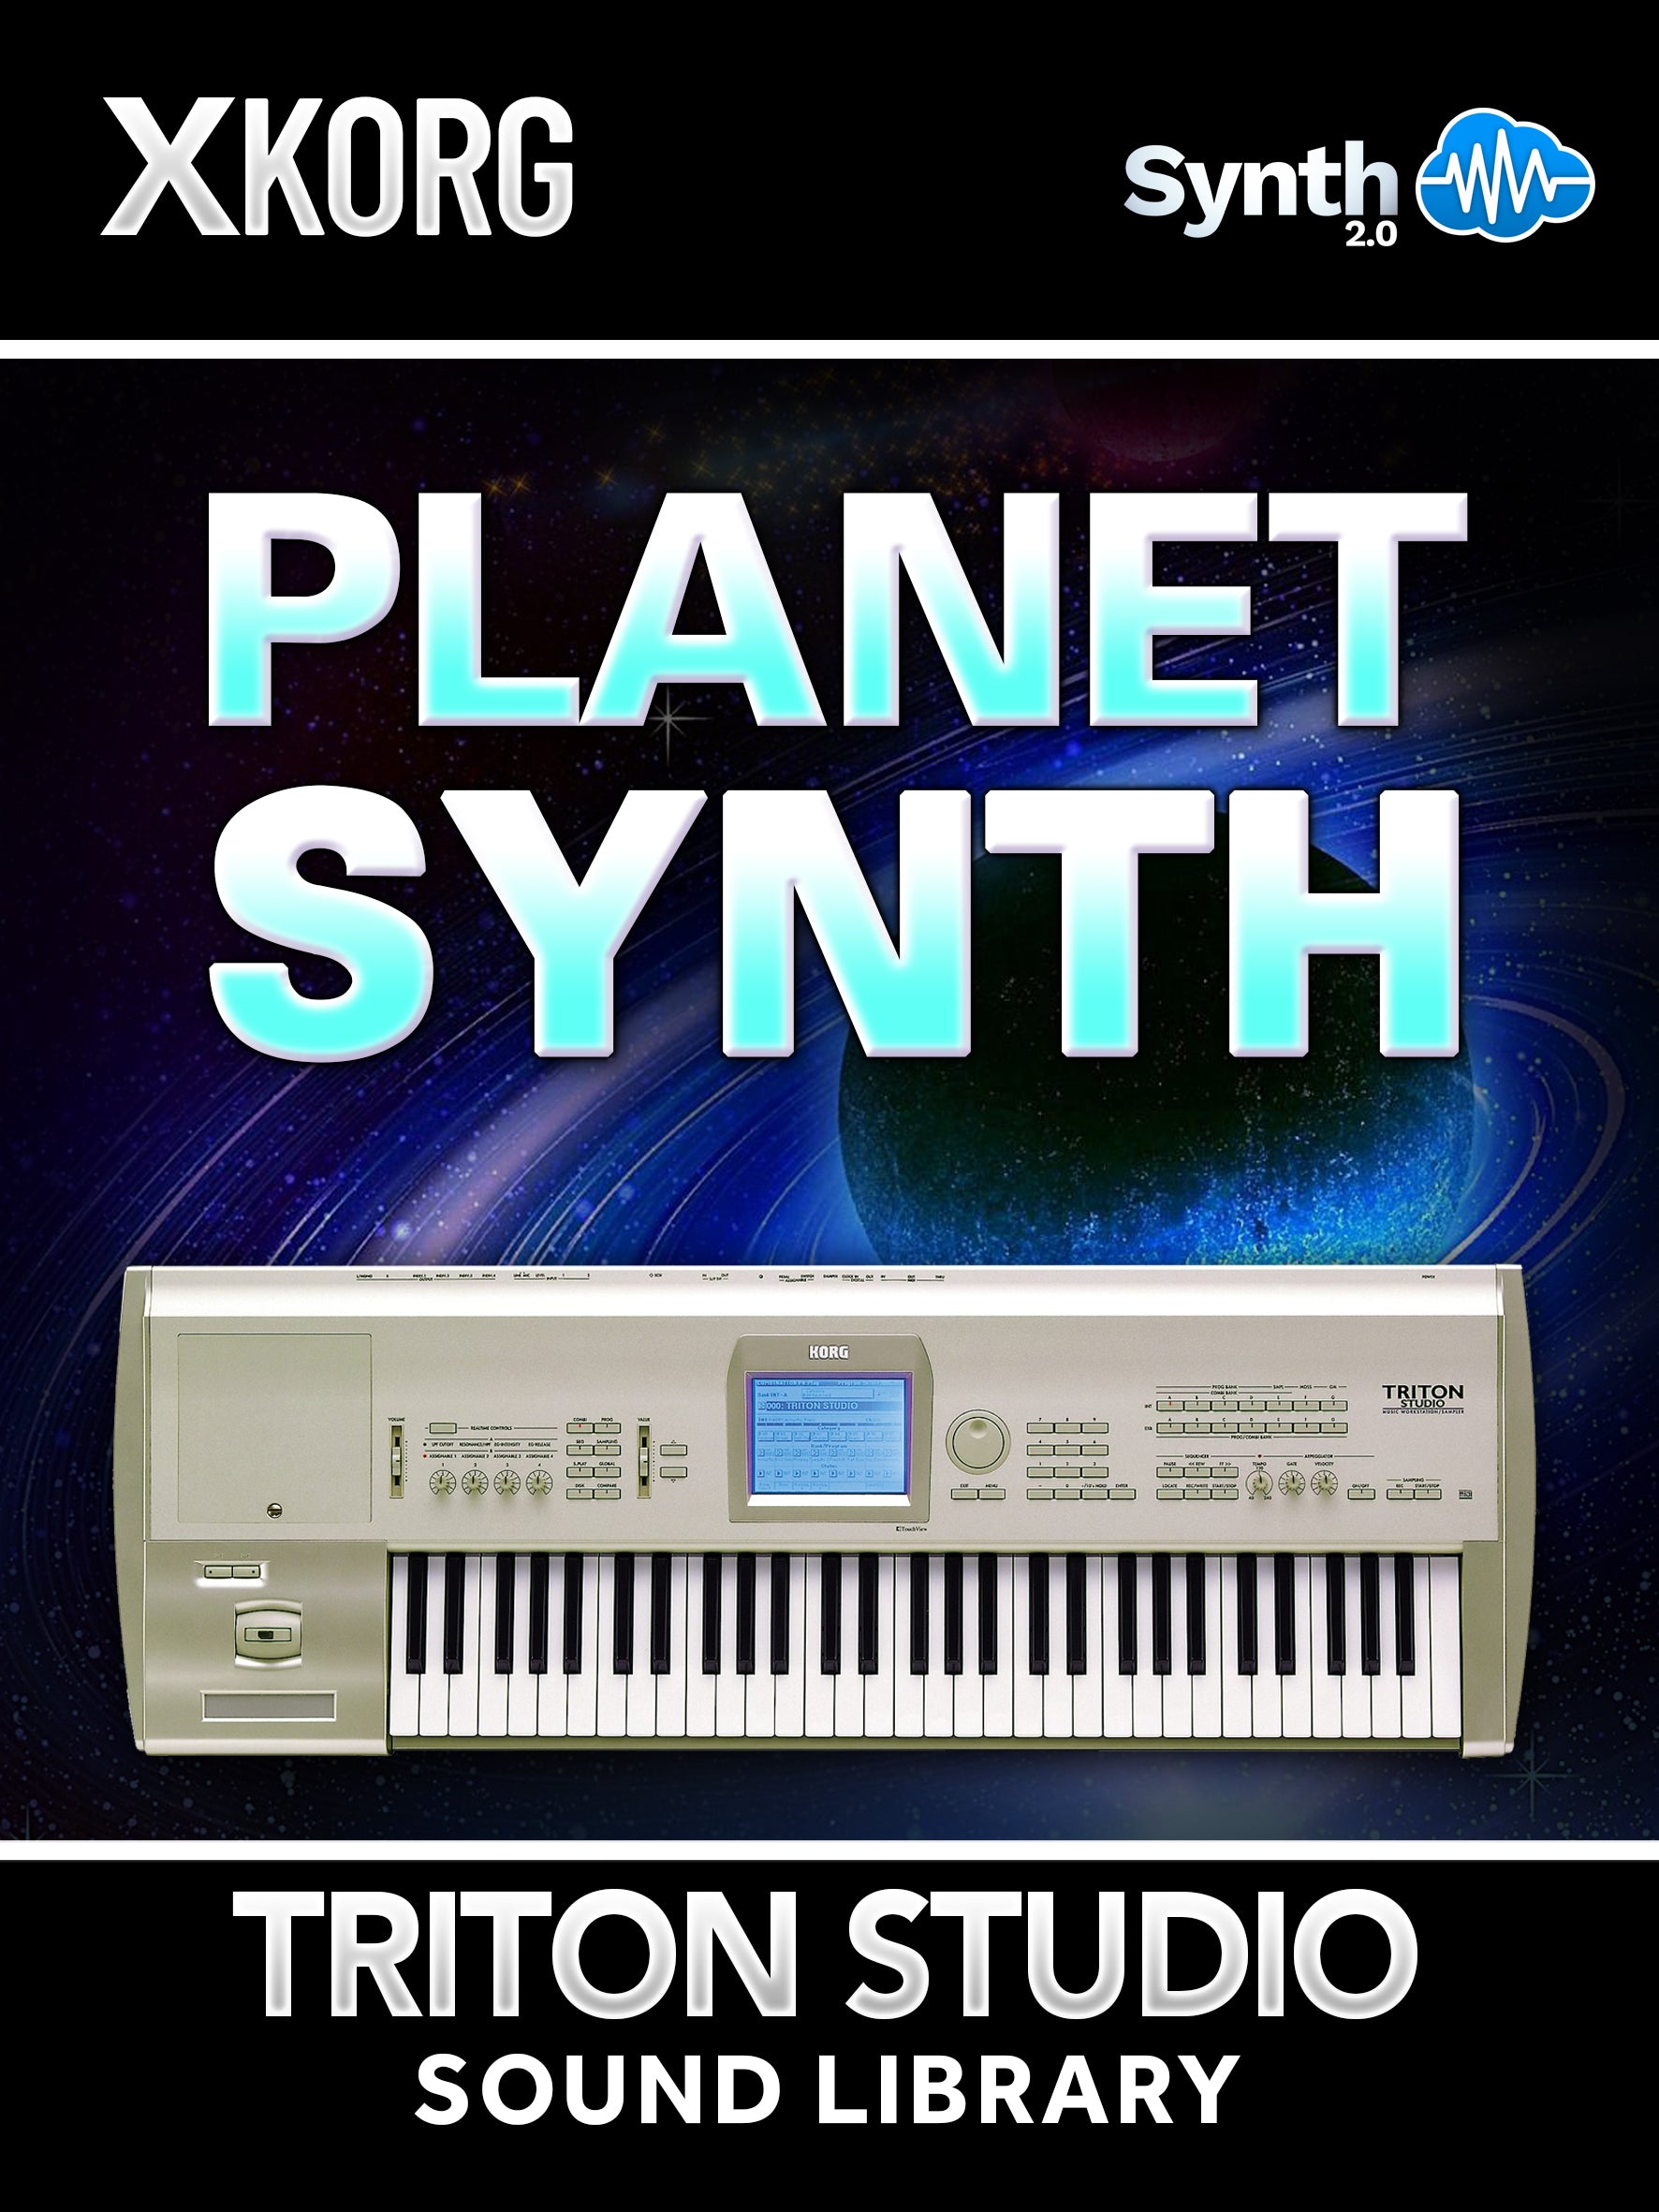 SSX104 - Planet Synth - Korg Triton STUDIO ( 18 presets )